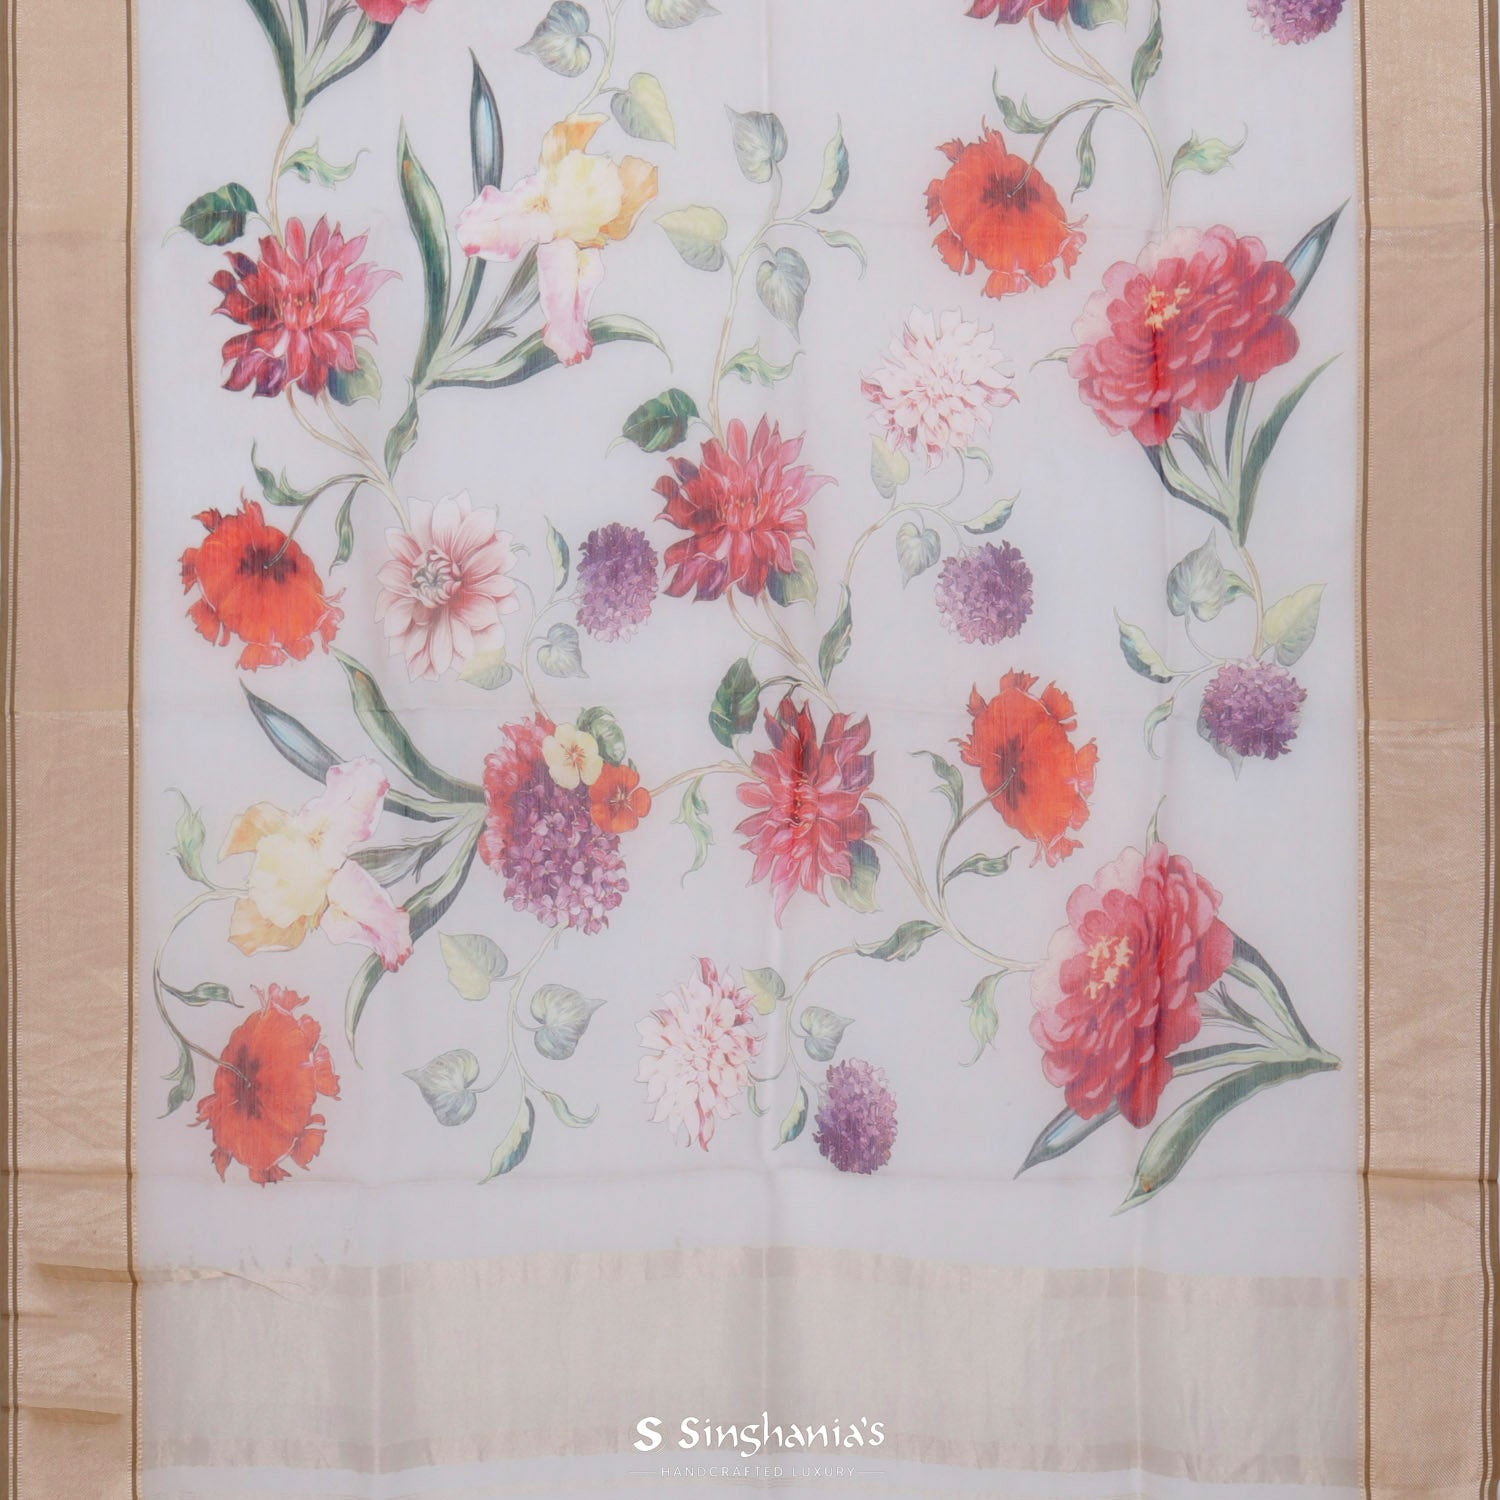 Snow White Printed Maheshwari Saree With Floral Pattern